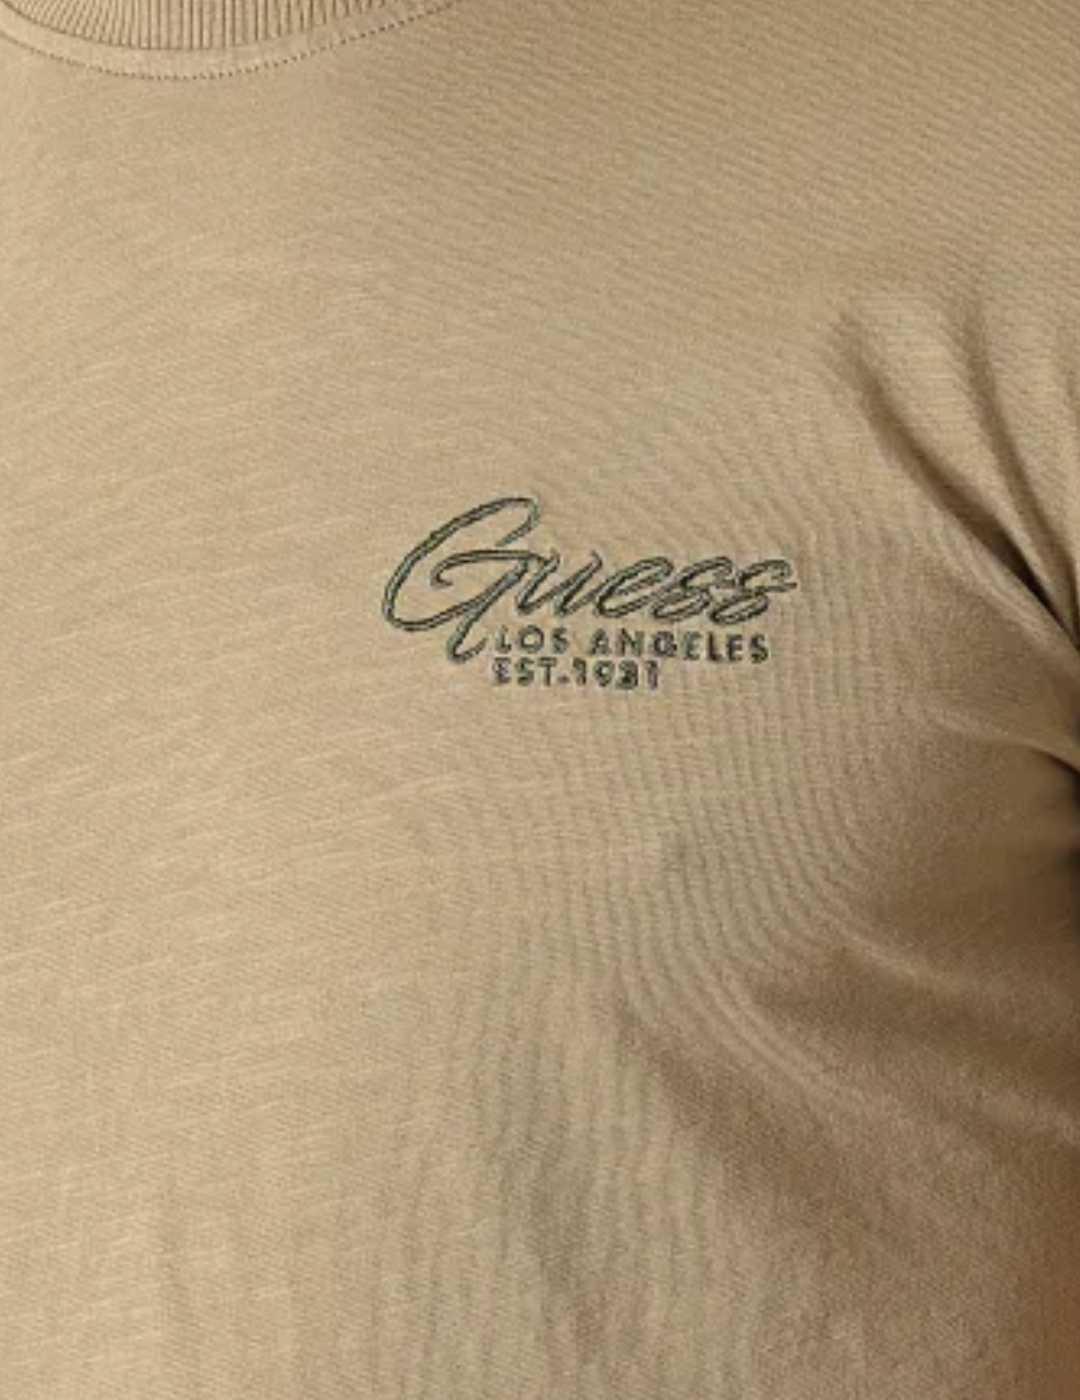 Camiseta Guess Treated verde manga corta para hombre